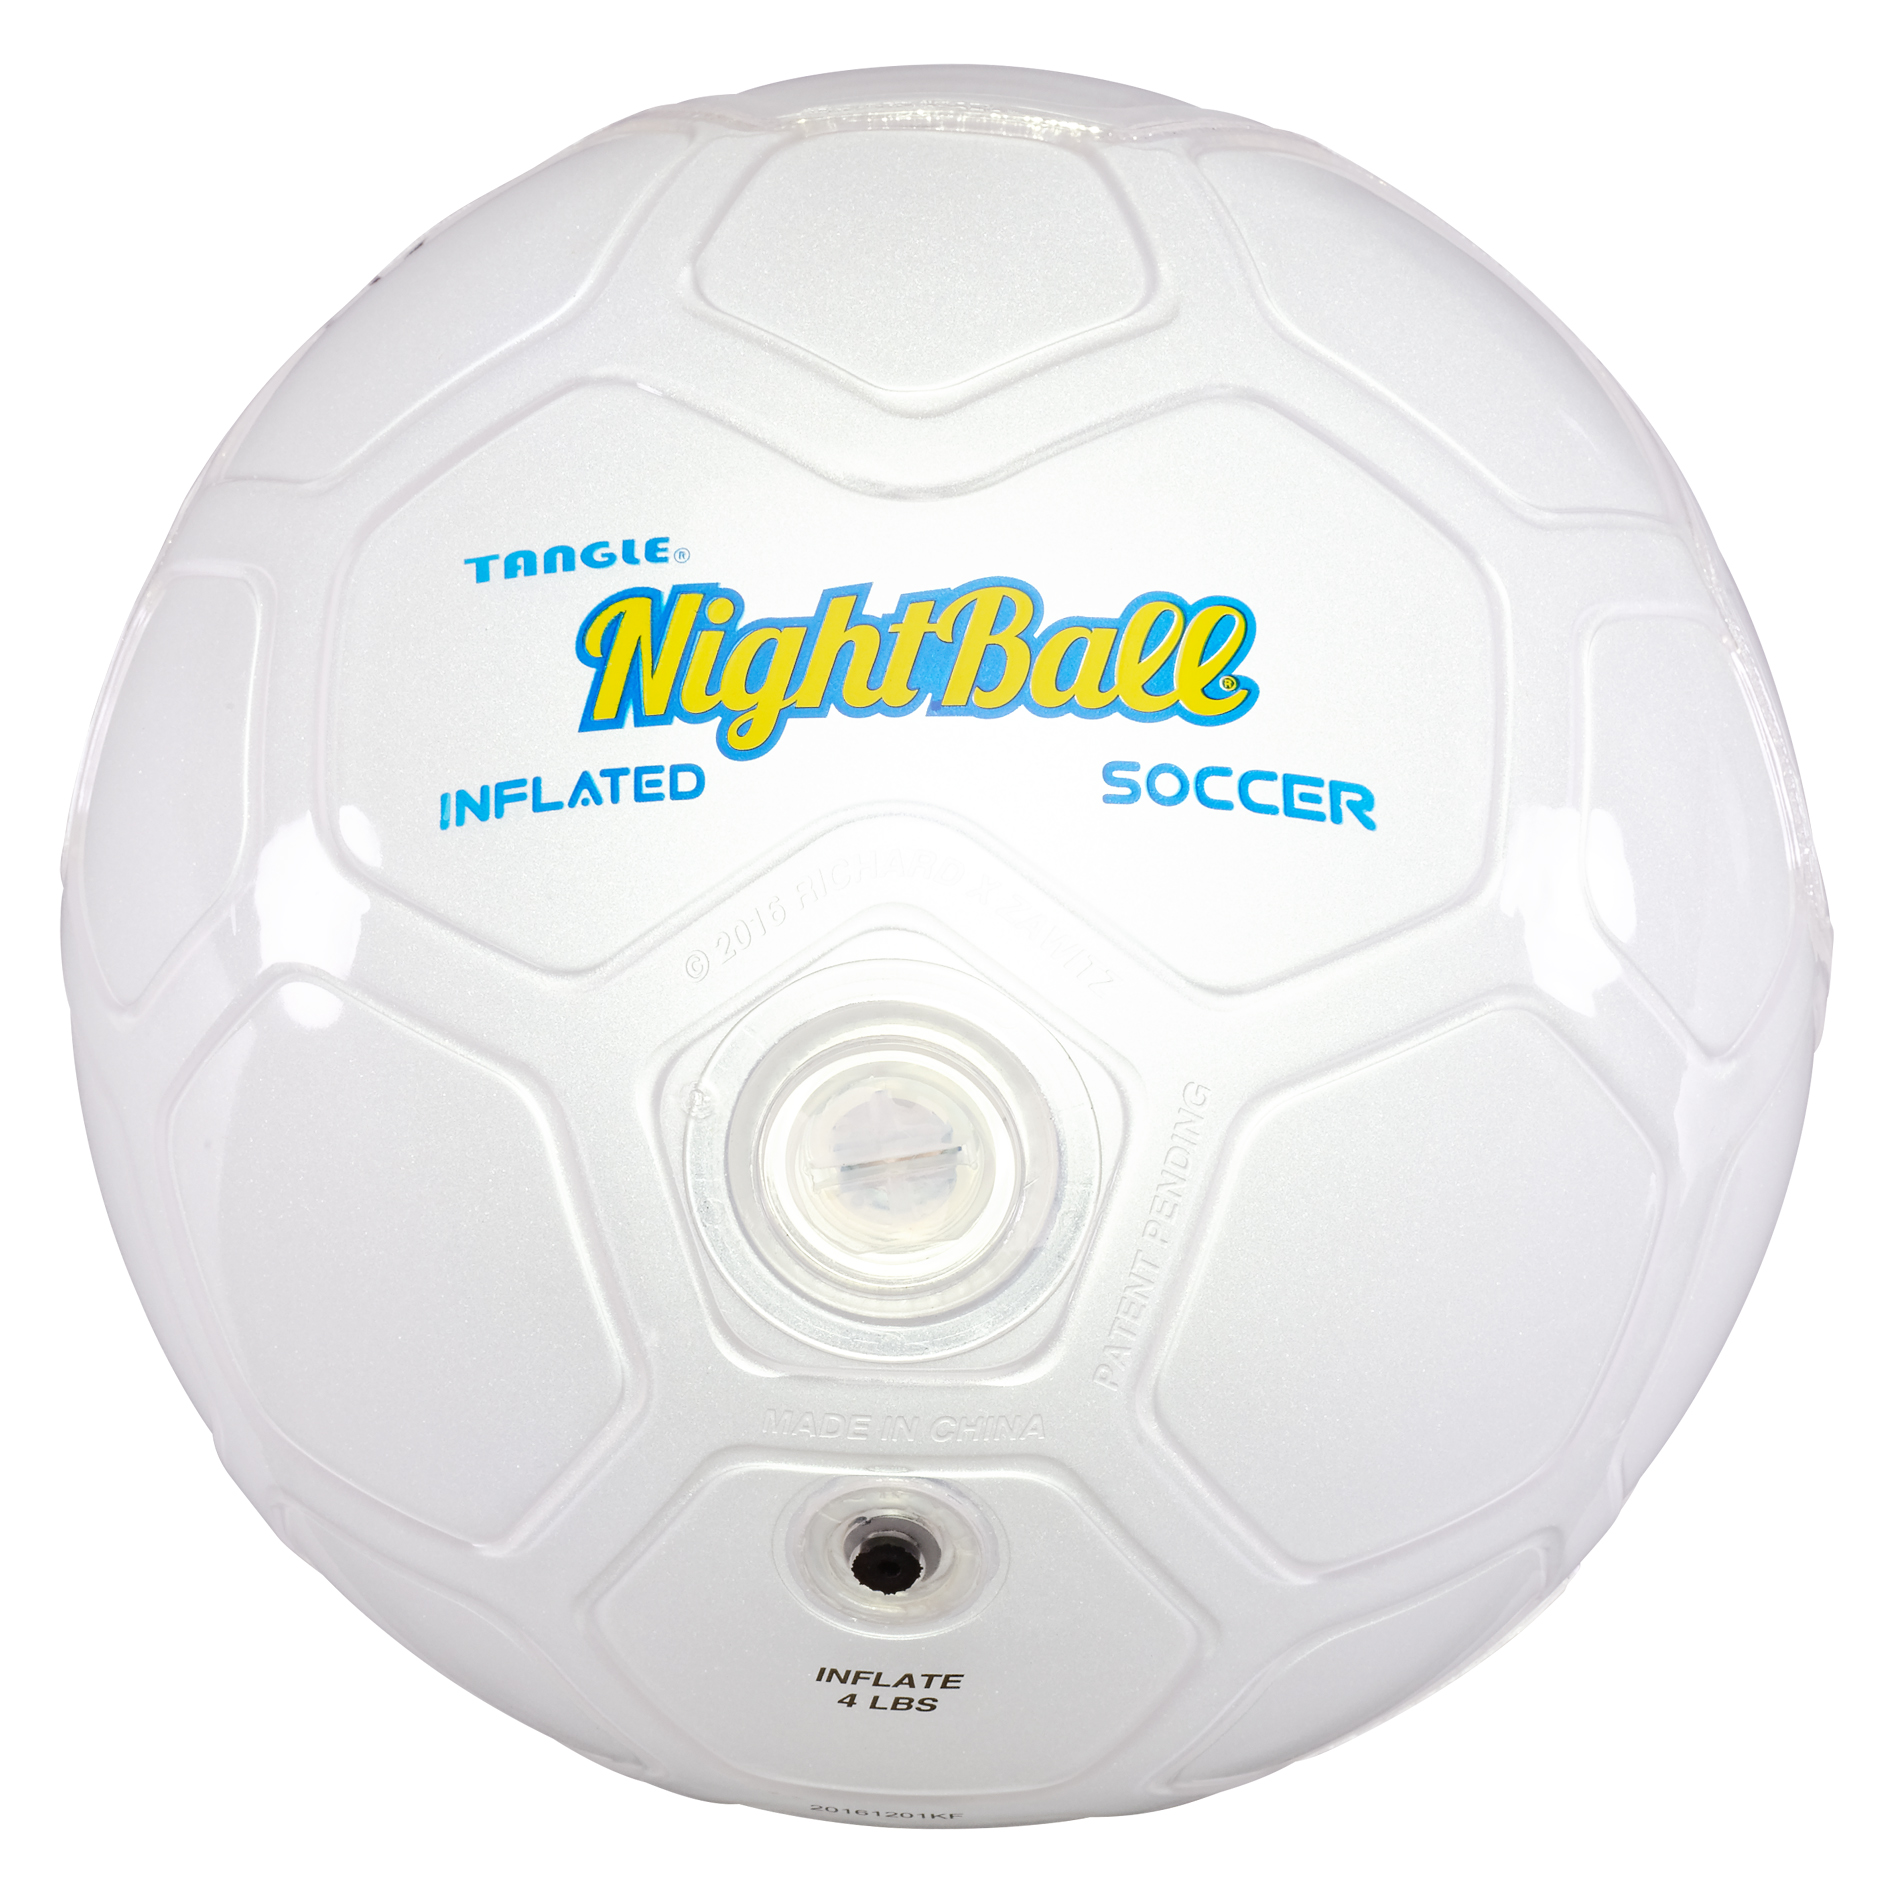 tangle Night Soccer Ball Size 5, White